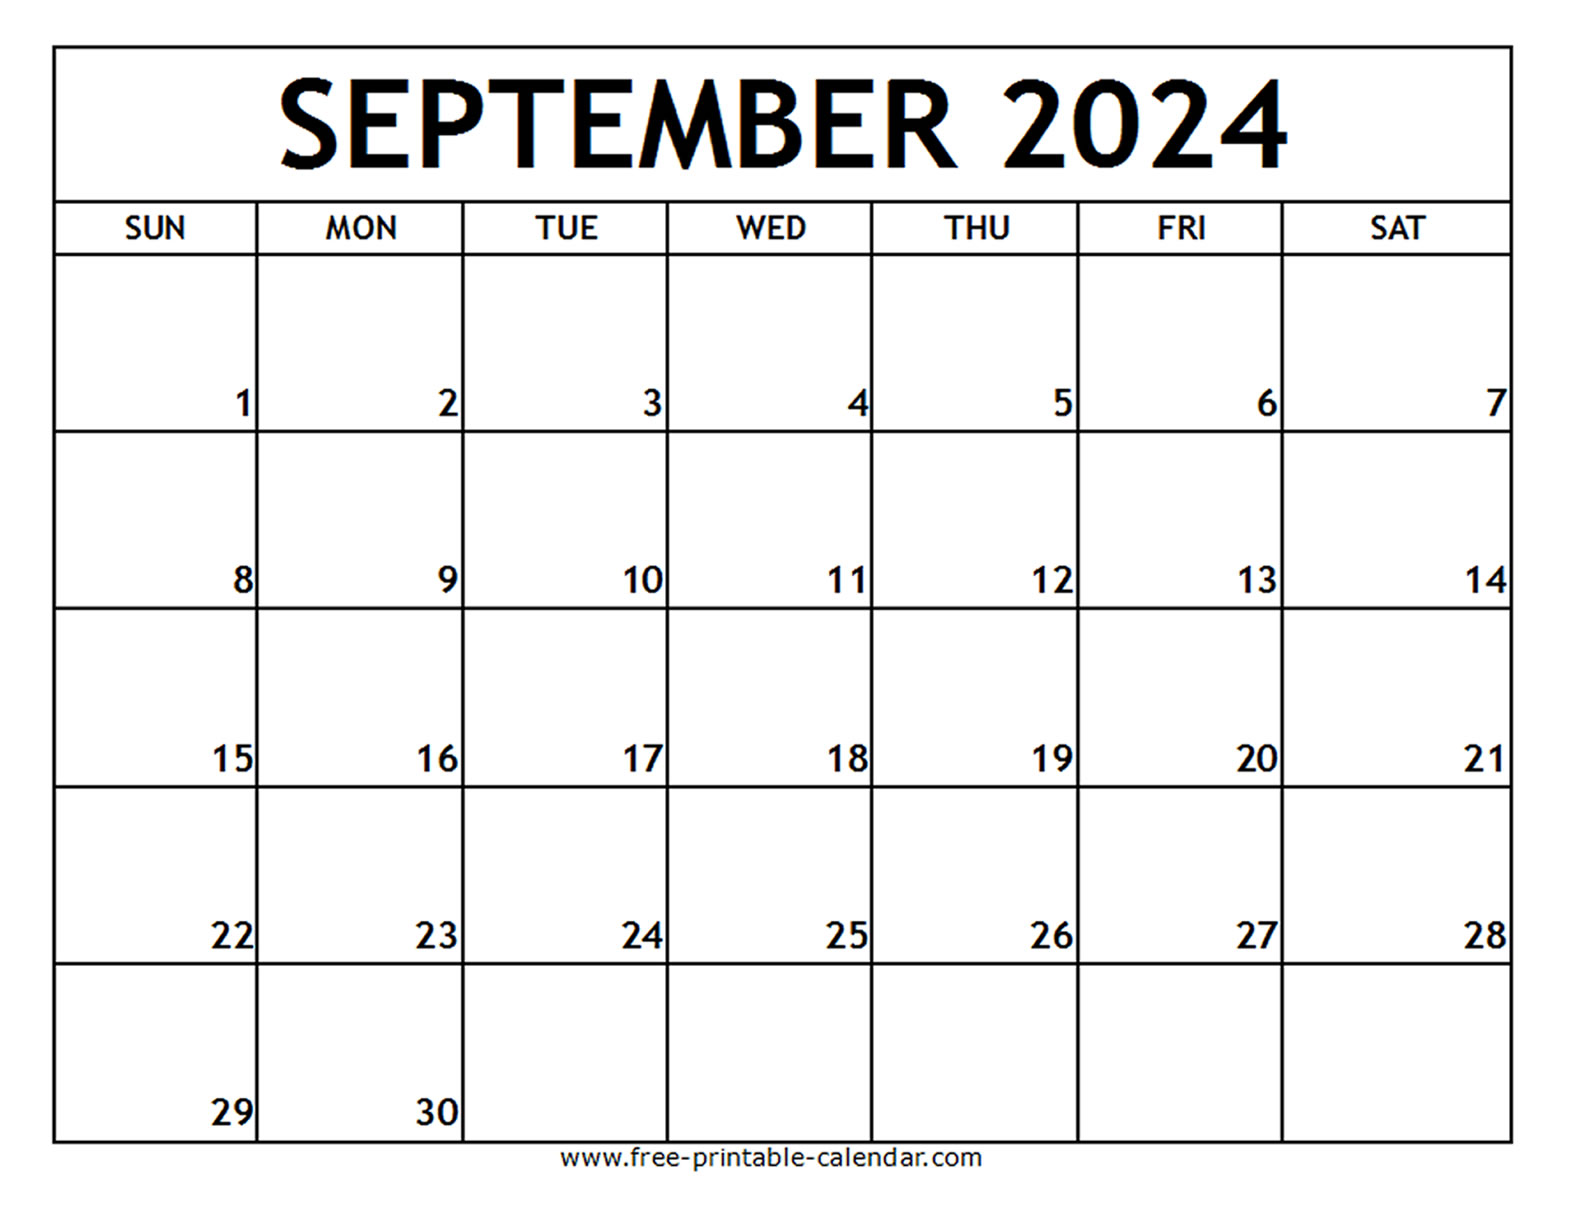 September 2024 Printable Calendar Free Printable